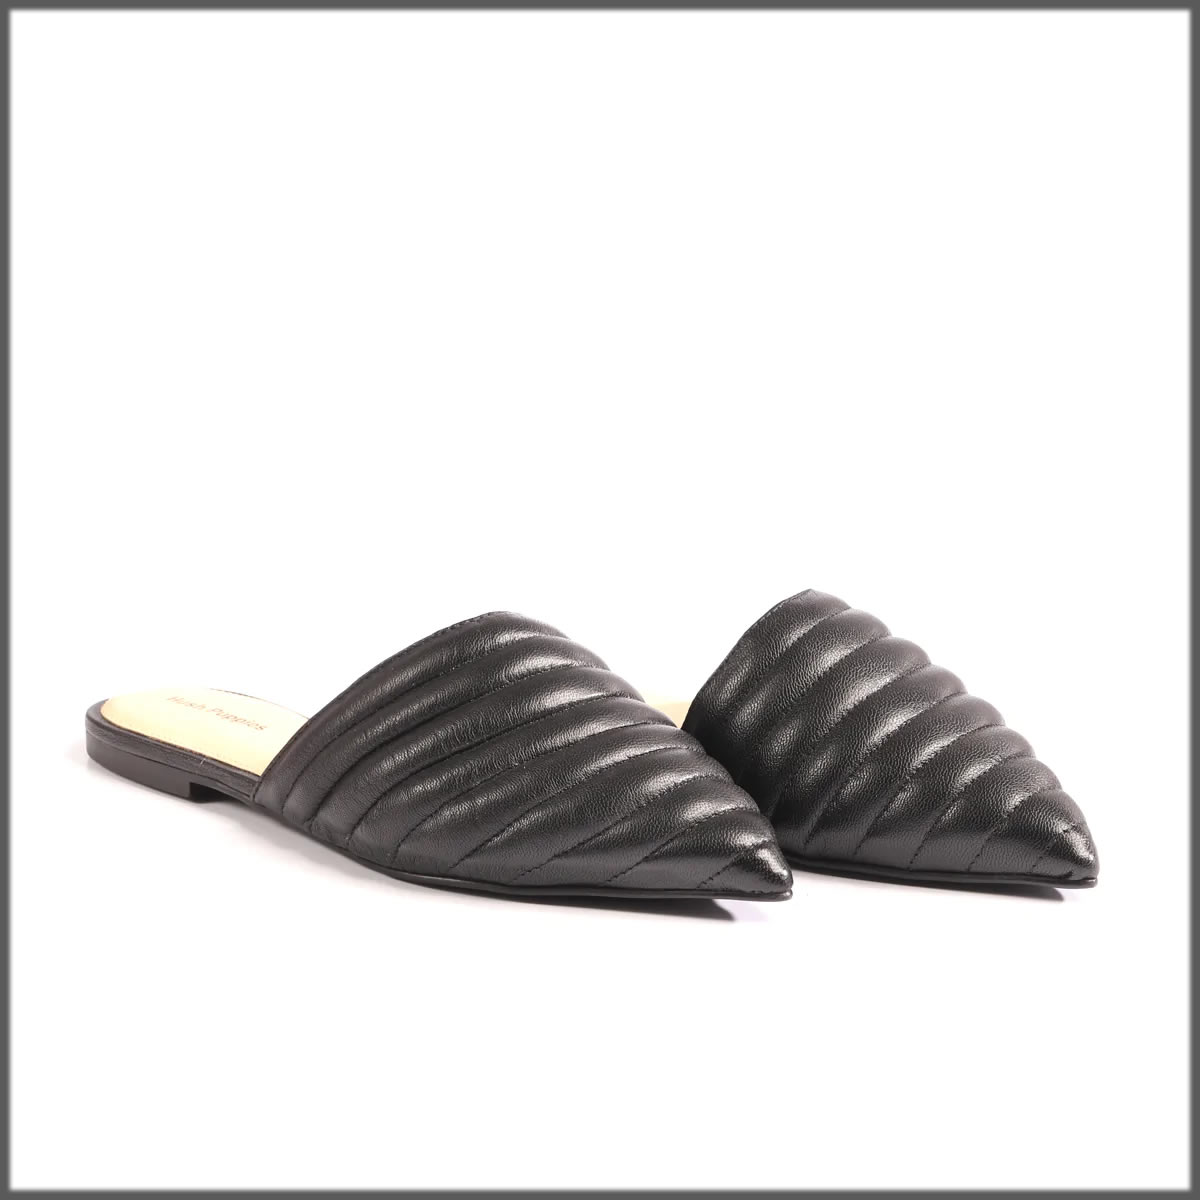 sleek black pump shoe for women